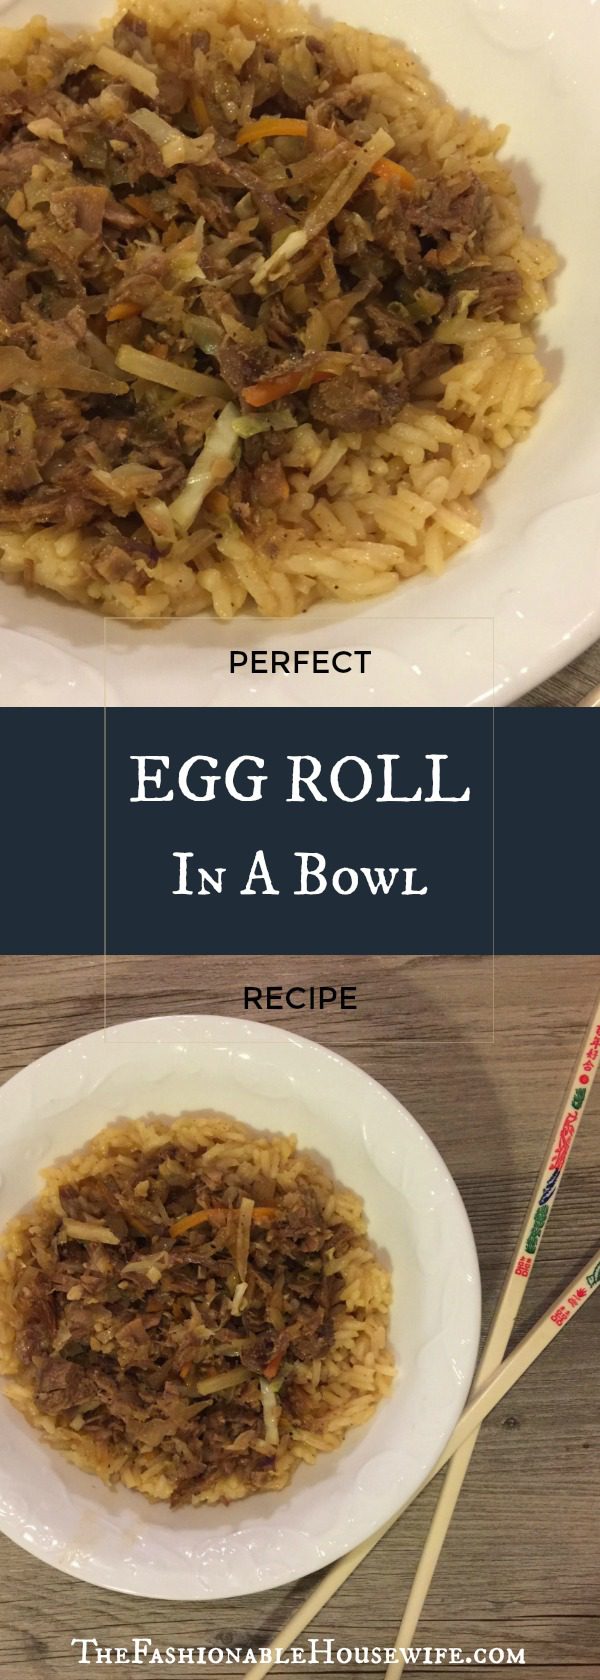 Egg Roll in a bowl recipe